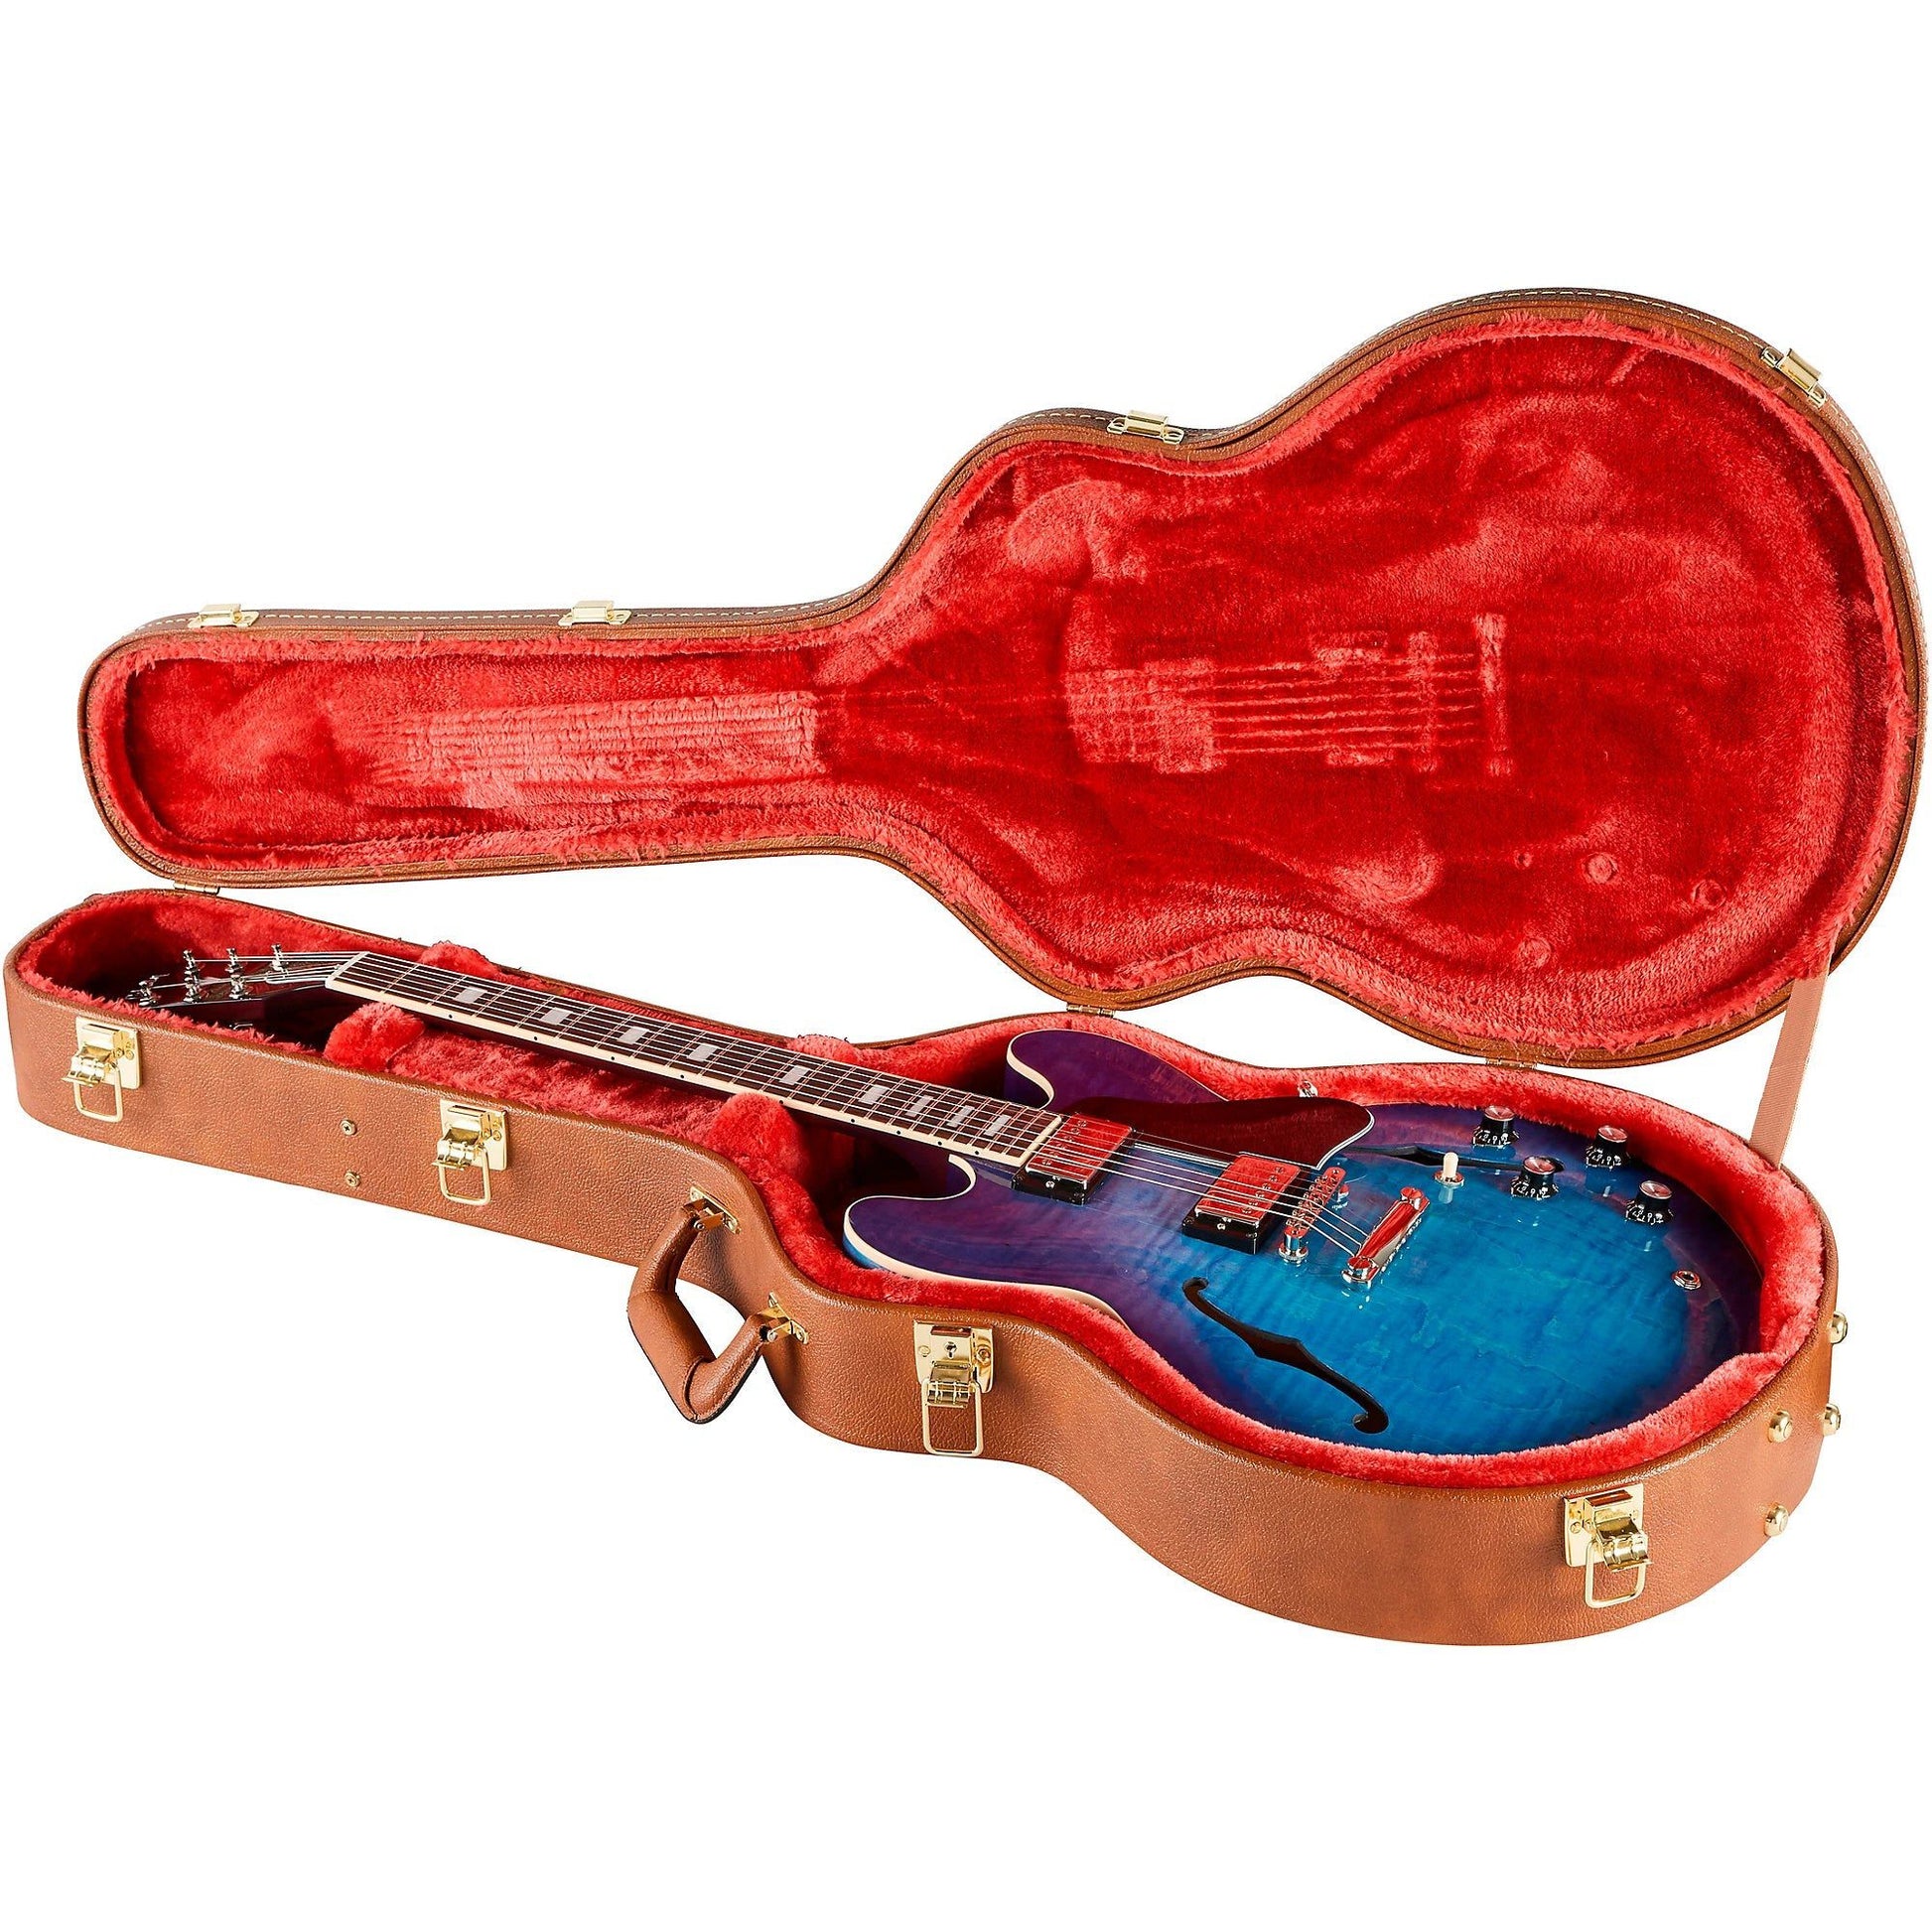 Đàn Guitar Điện Gibson Figured Limited Edition Semi Hollow, Blueberry Burst - Qua Sử Dụng - Việt Music